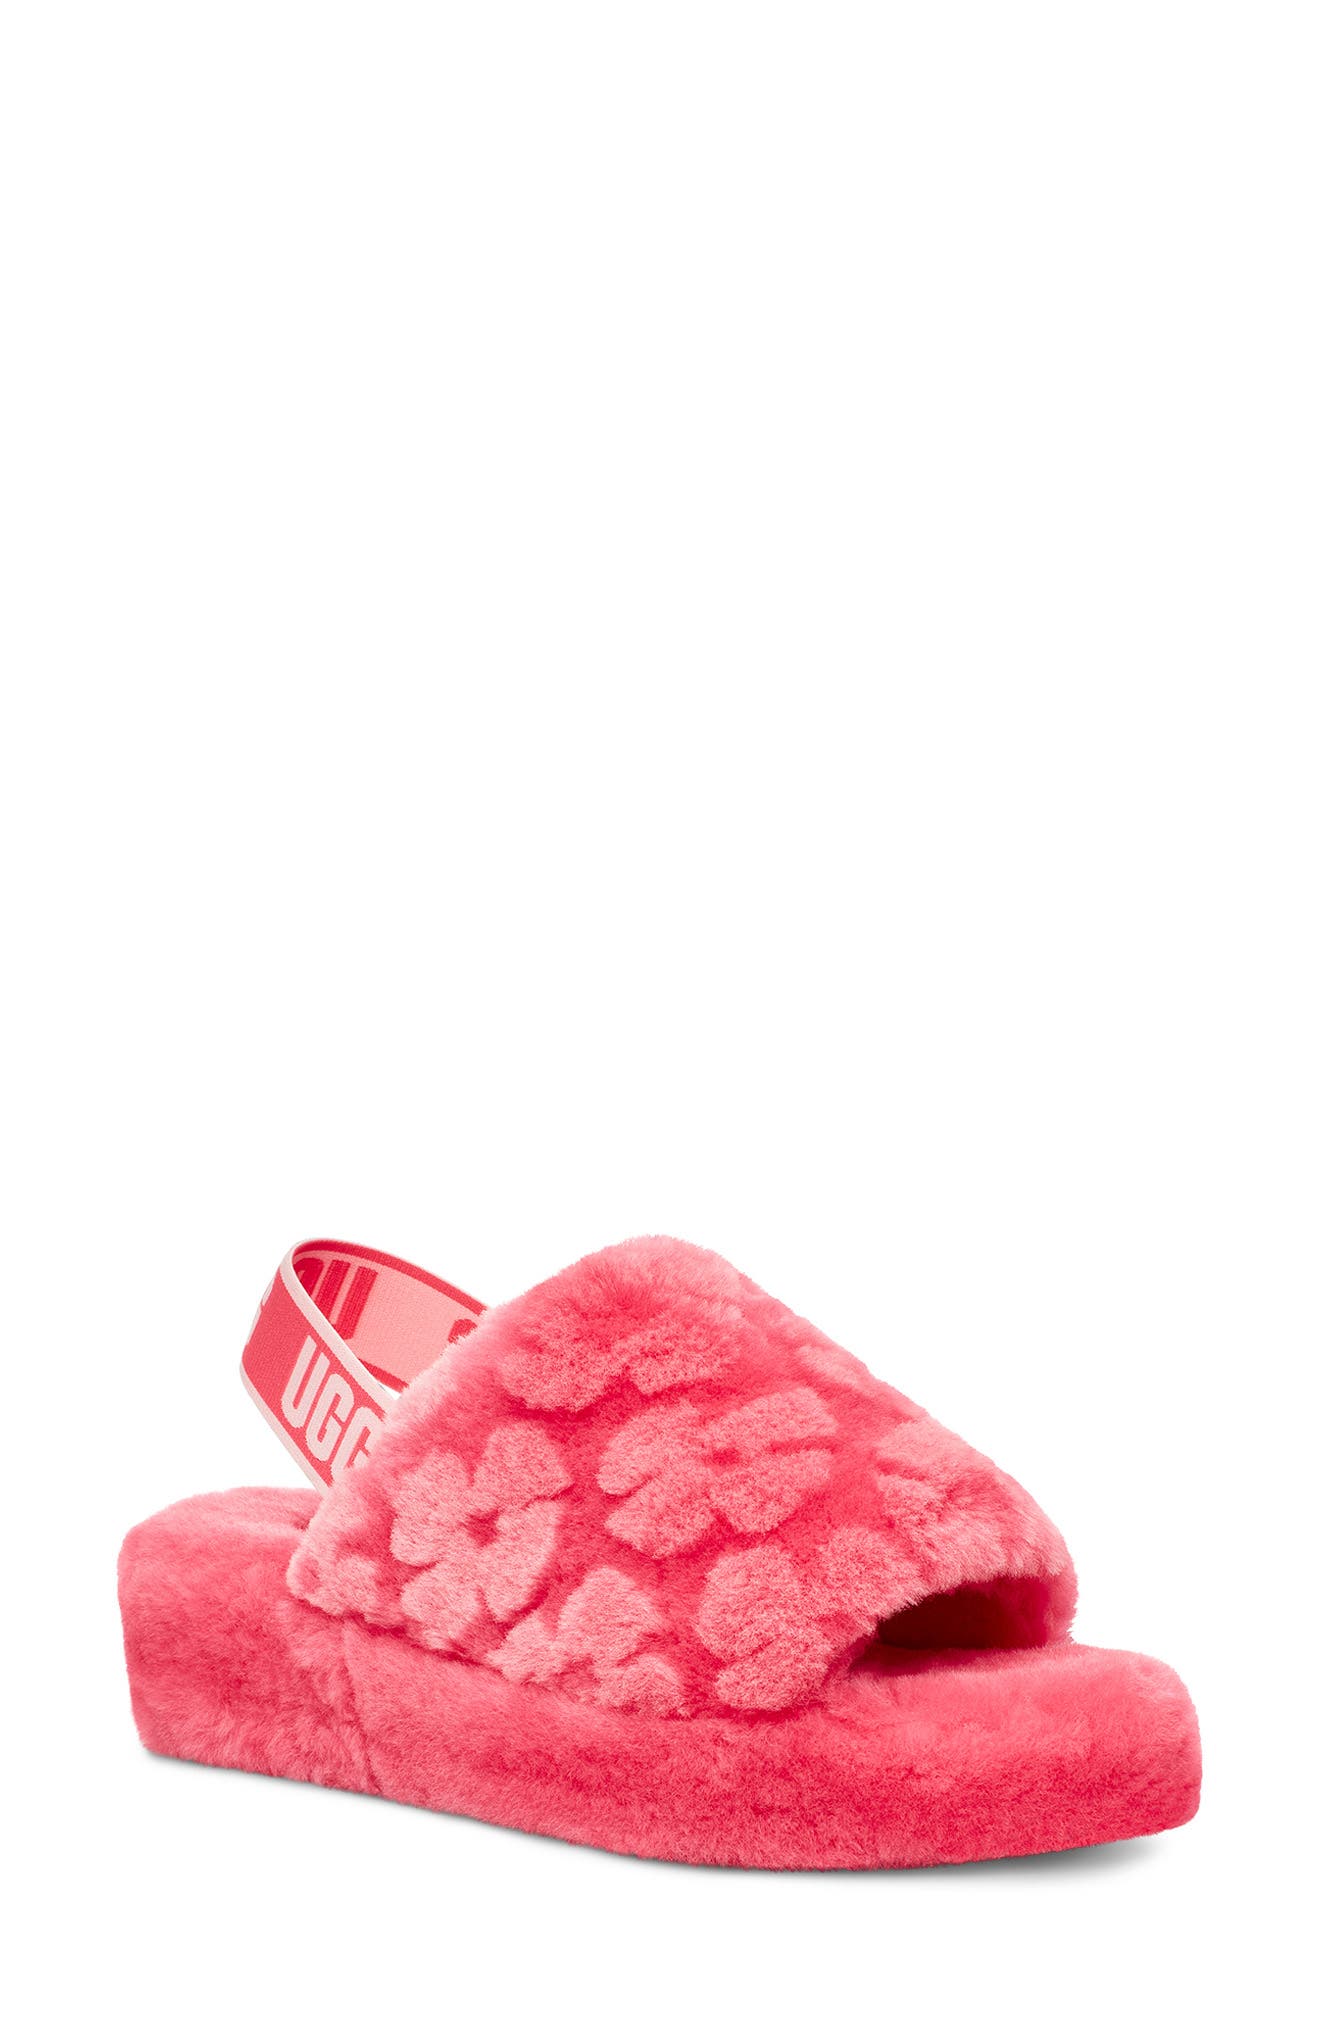 nordstrom fuzzy slippers